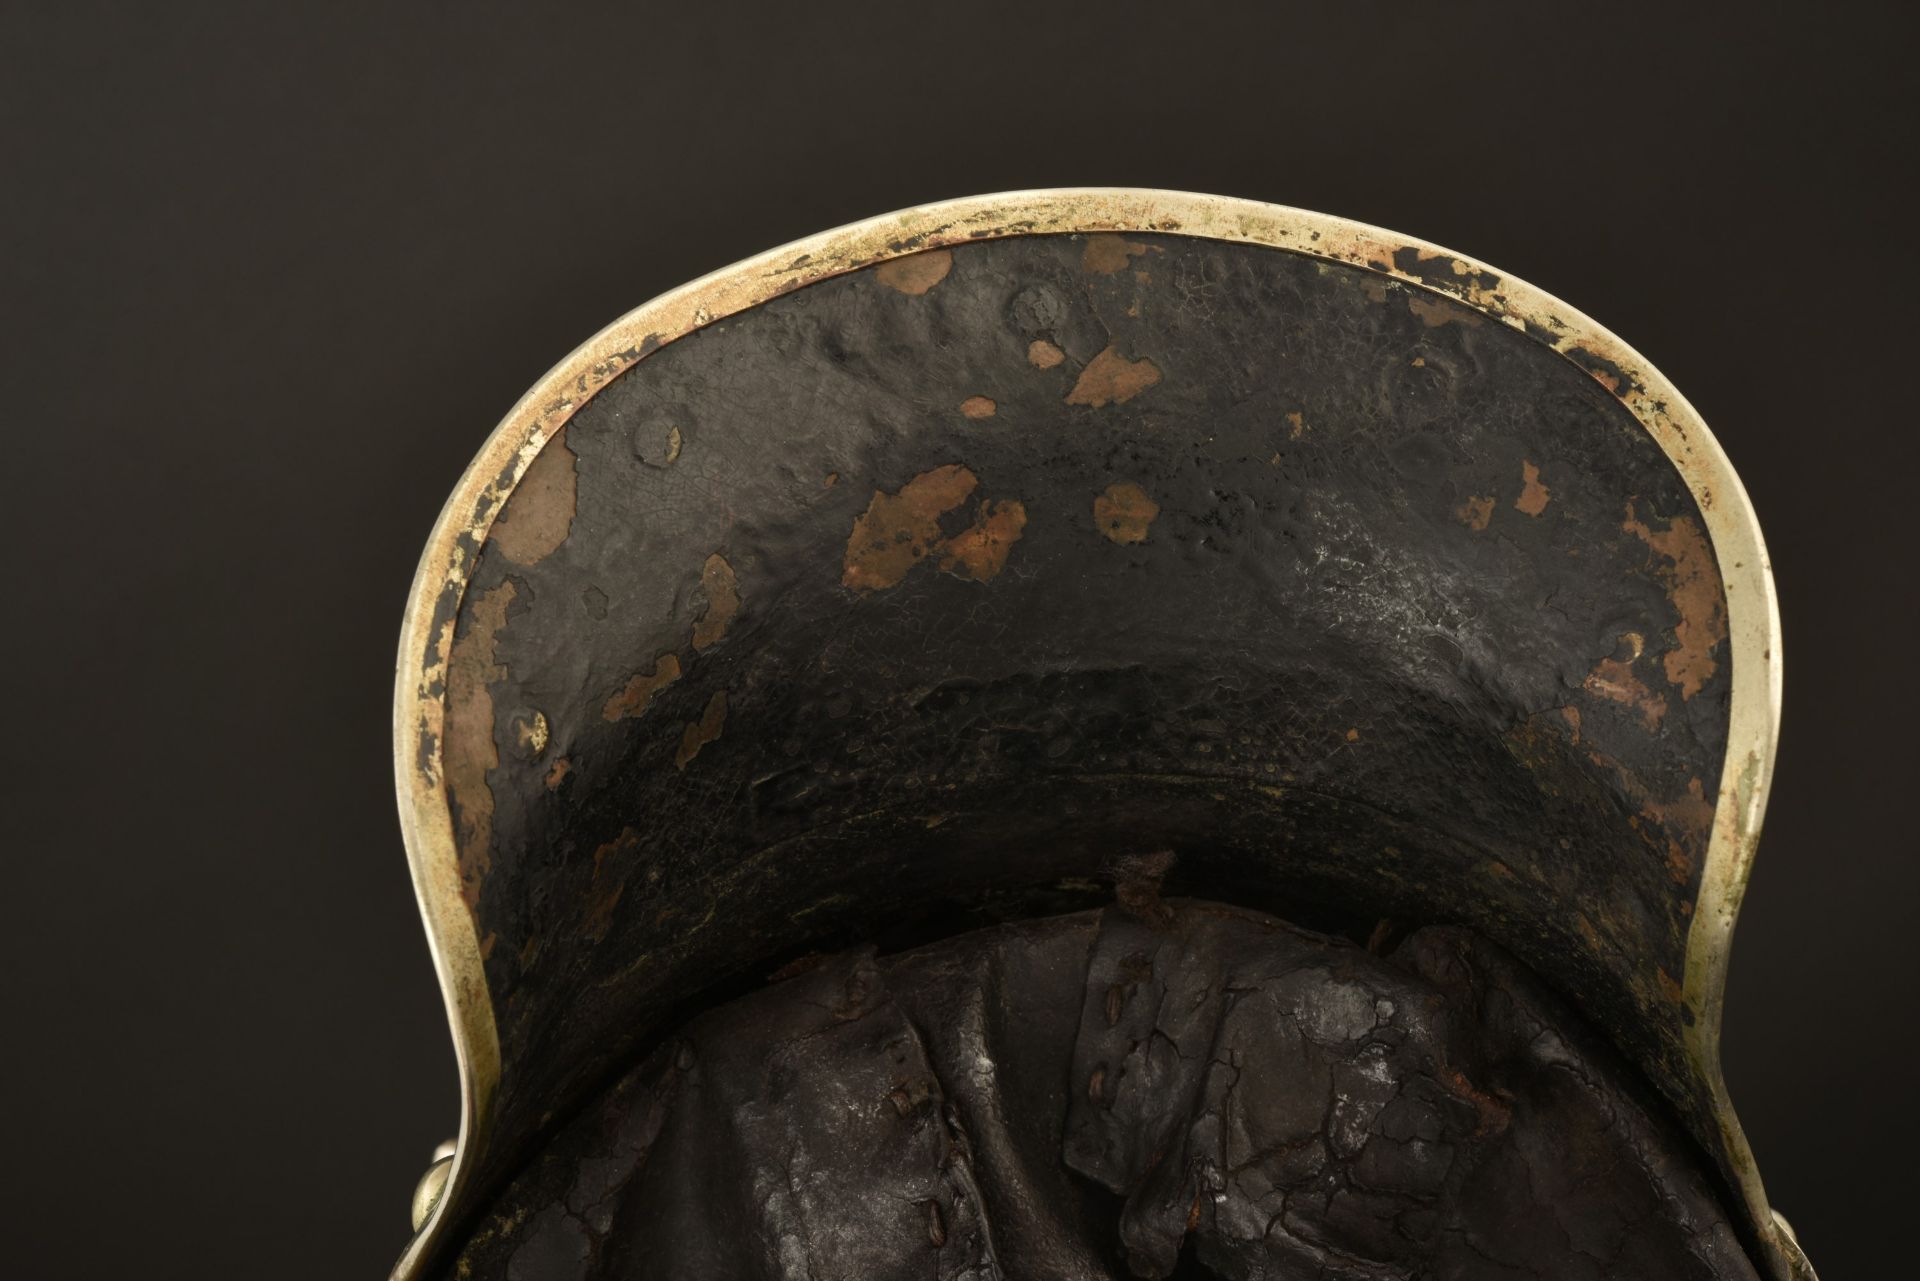 Casque de Garde Kurassier modele 1889 en grande tenue. Guard Cuirassier spiked helmet with parade ea - Image 3 of 5